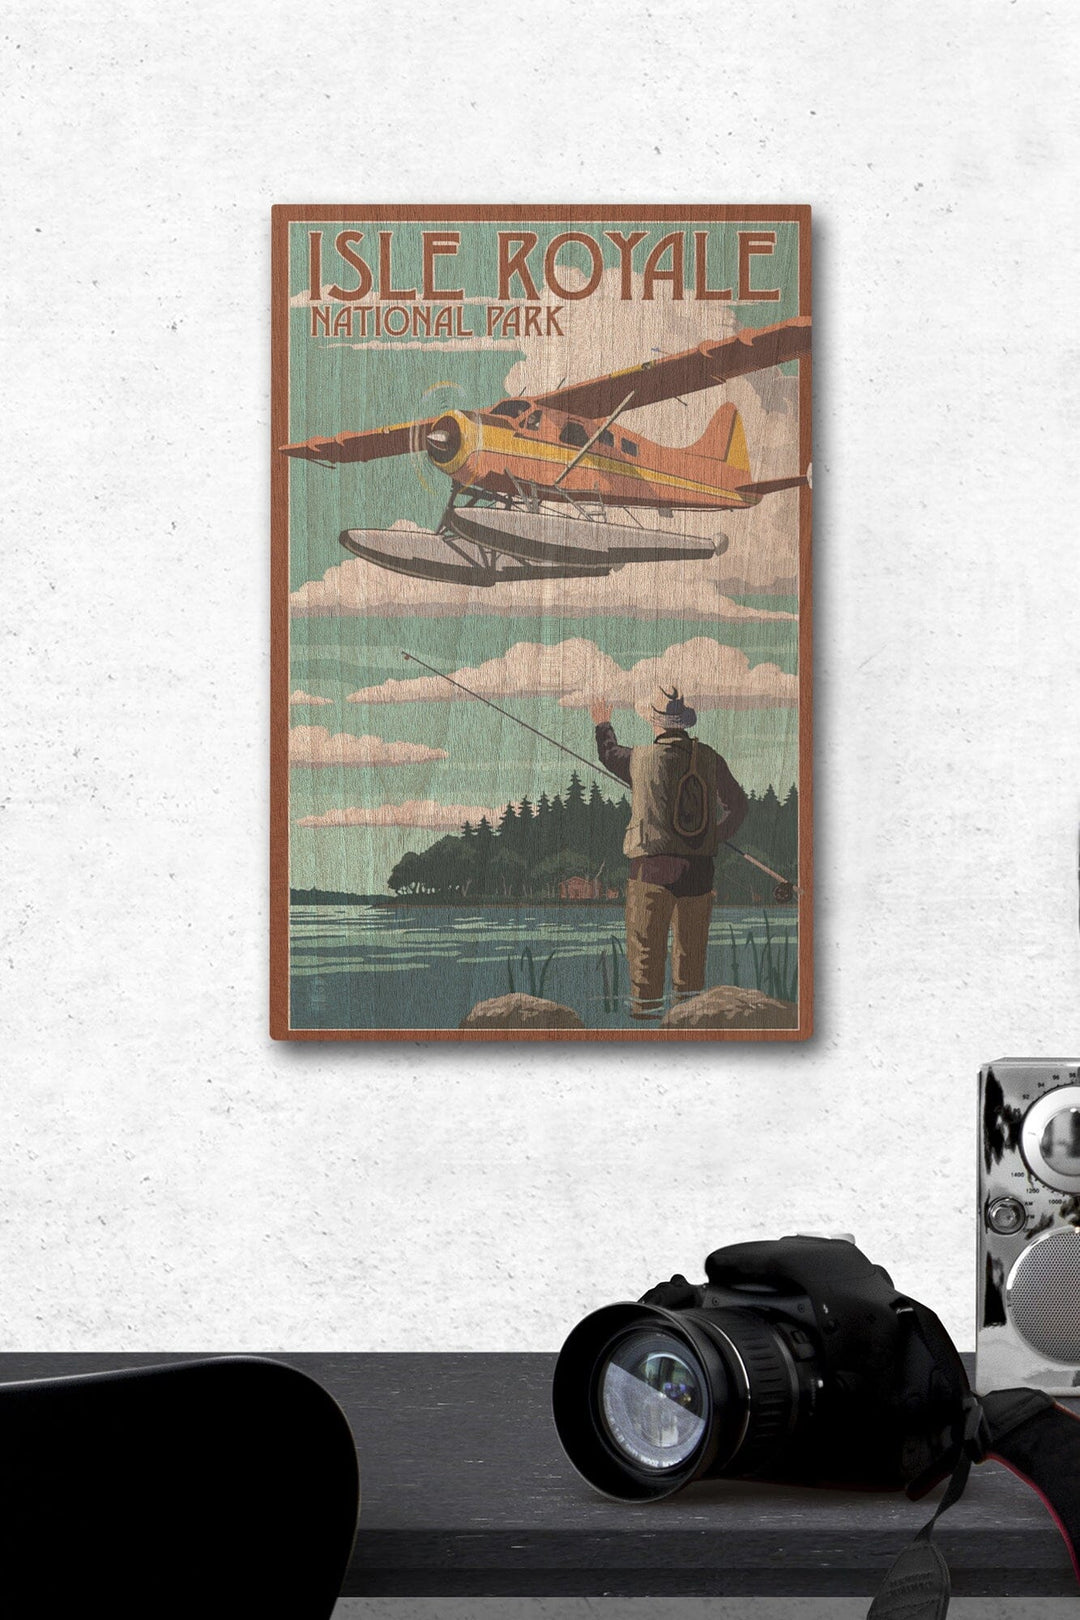 Isle Royale National Park, Michigan, Float Plane & Fisherman, Lantern Press Artwork, Wood Signs and Postcards Wood Lantern Press 12 x 18 Wood Gallery Print 